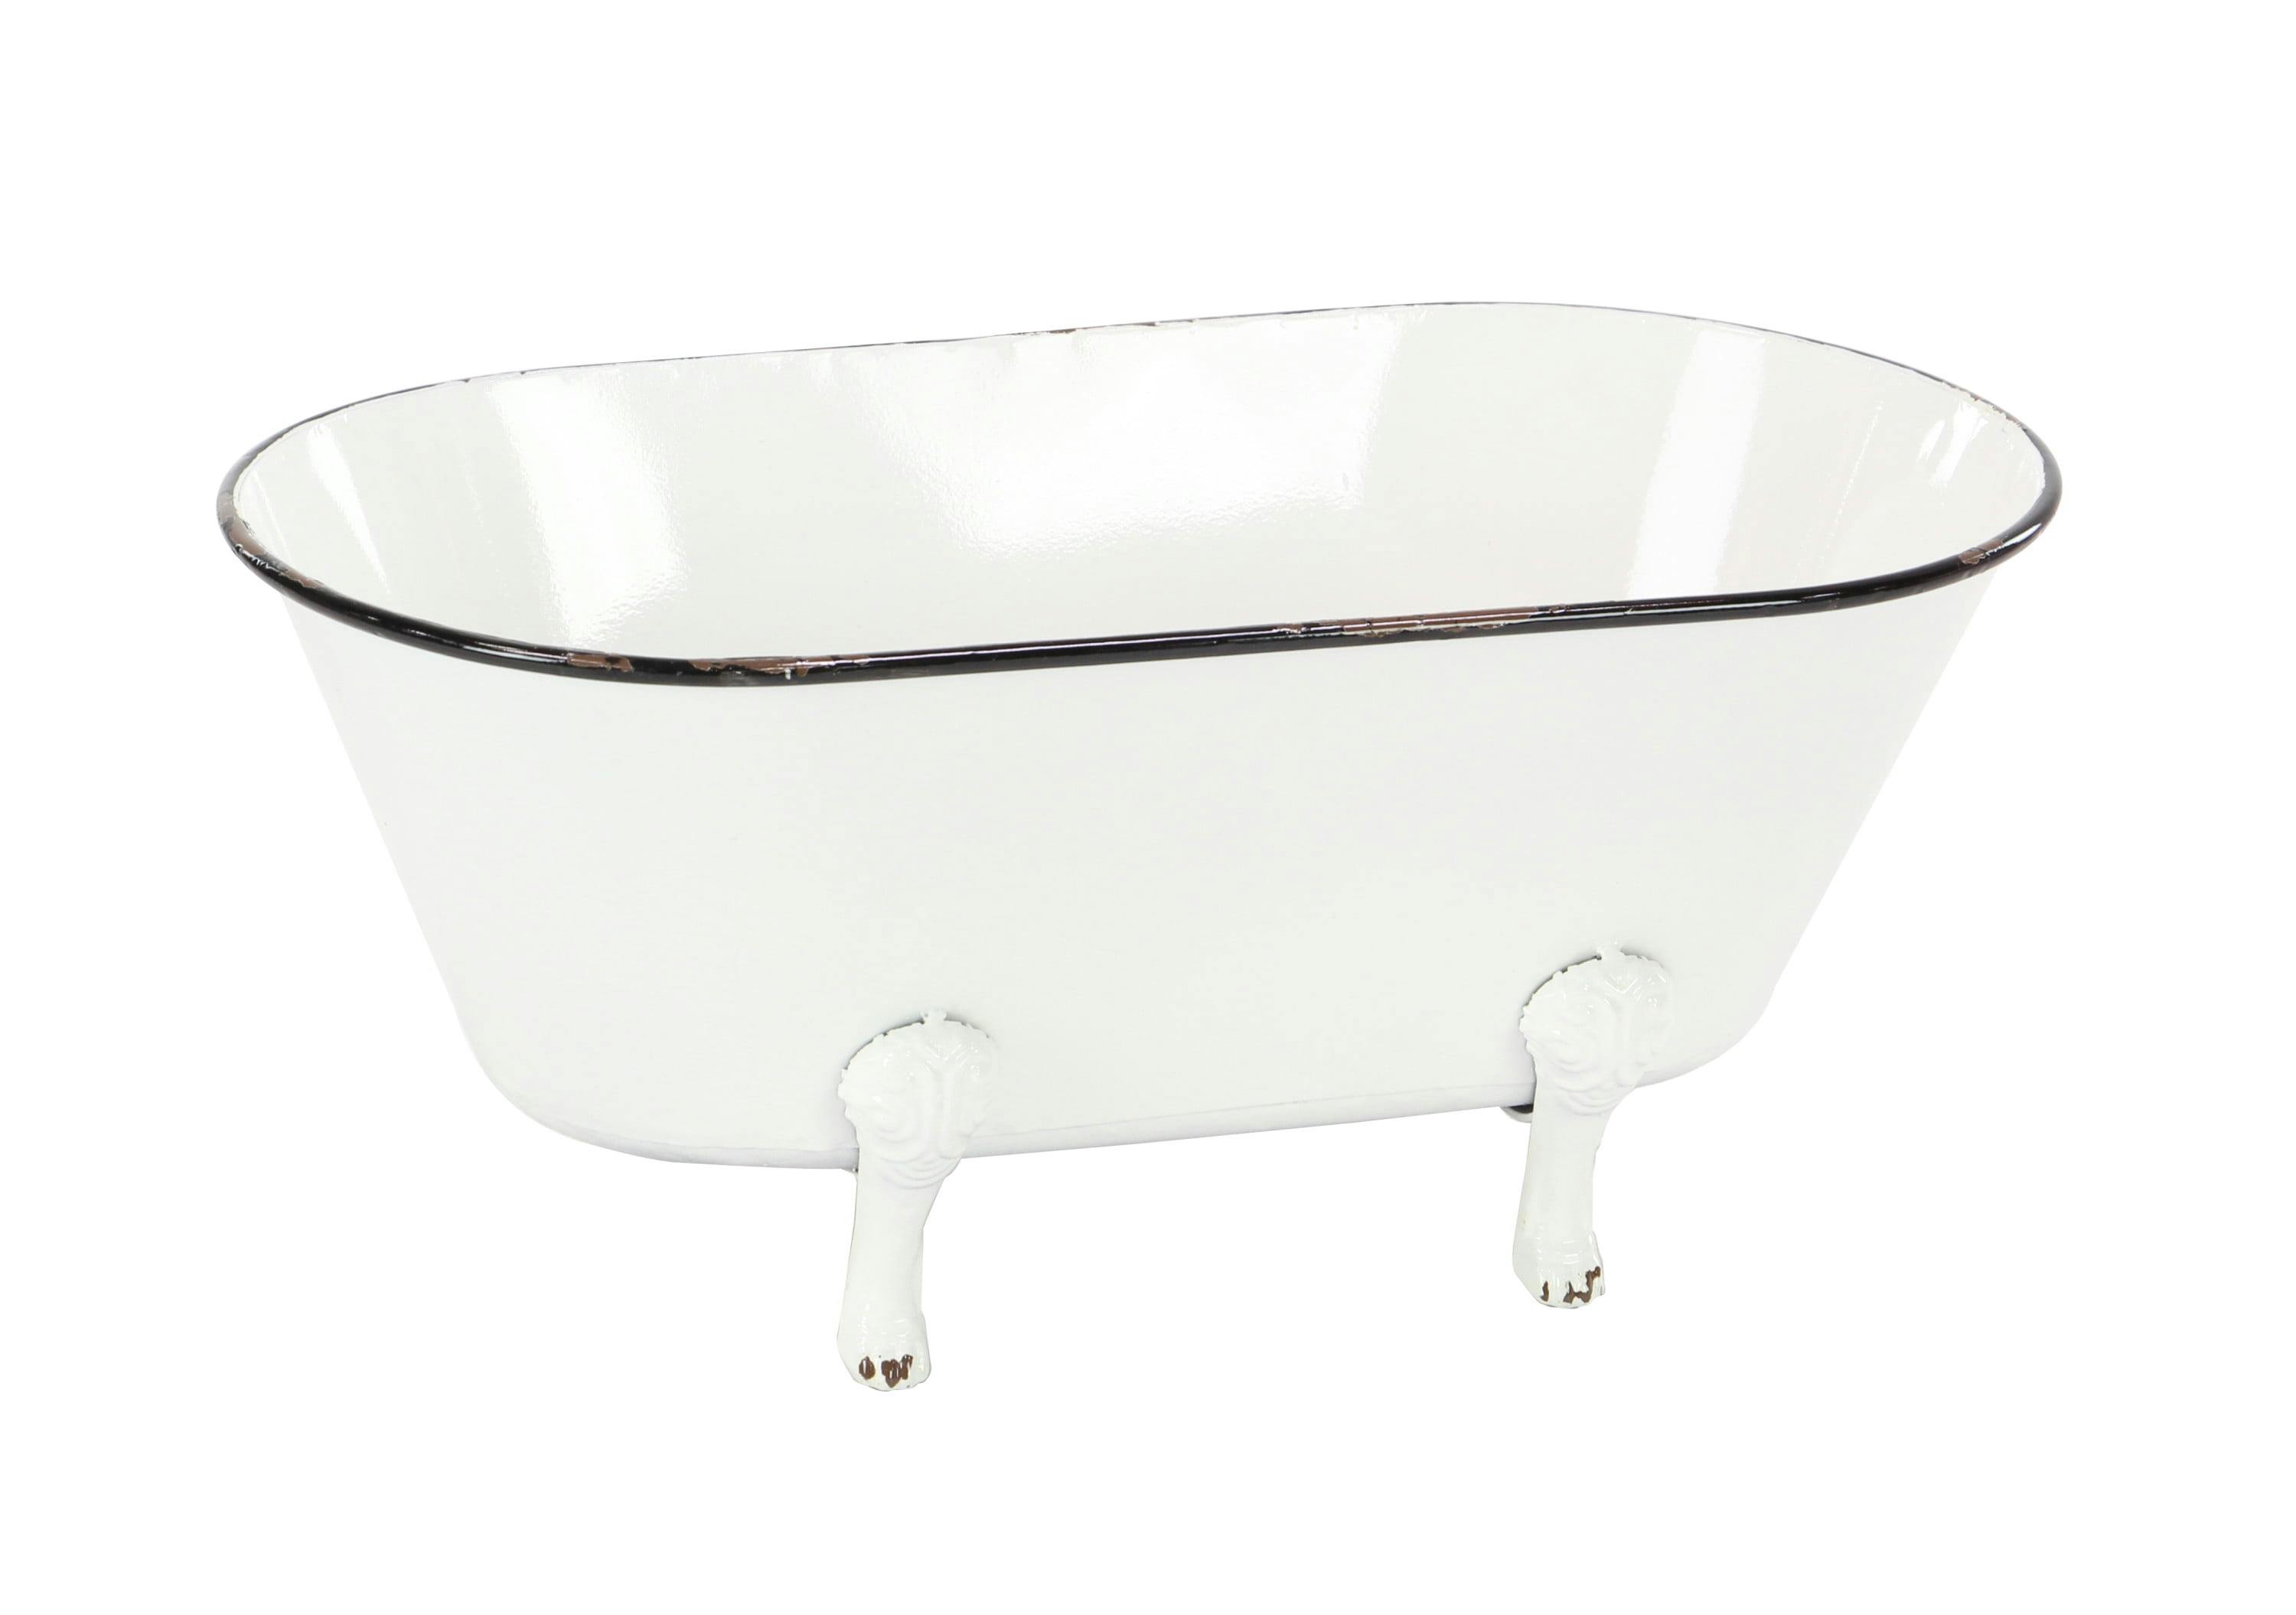 Charming White Metal Bathtub Planter for Indoor/Outdoor Decor